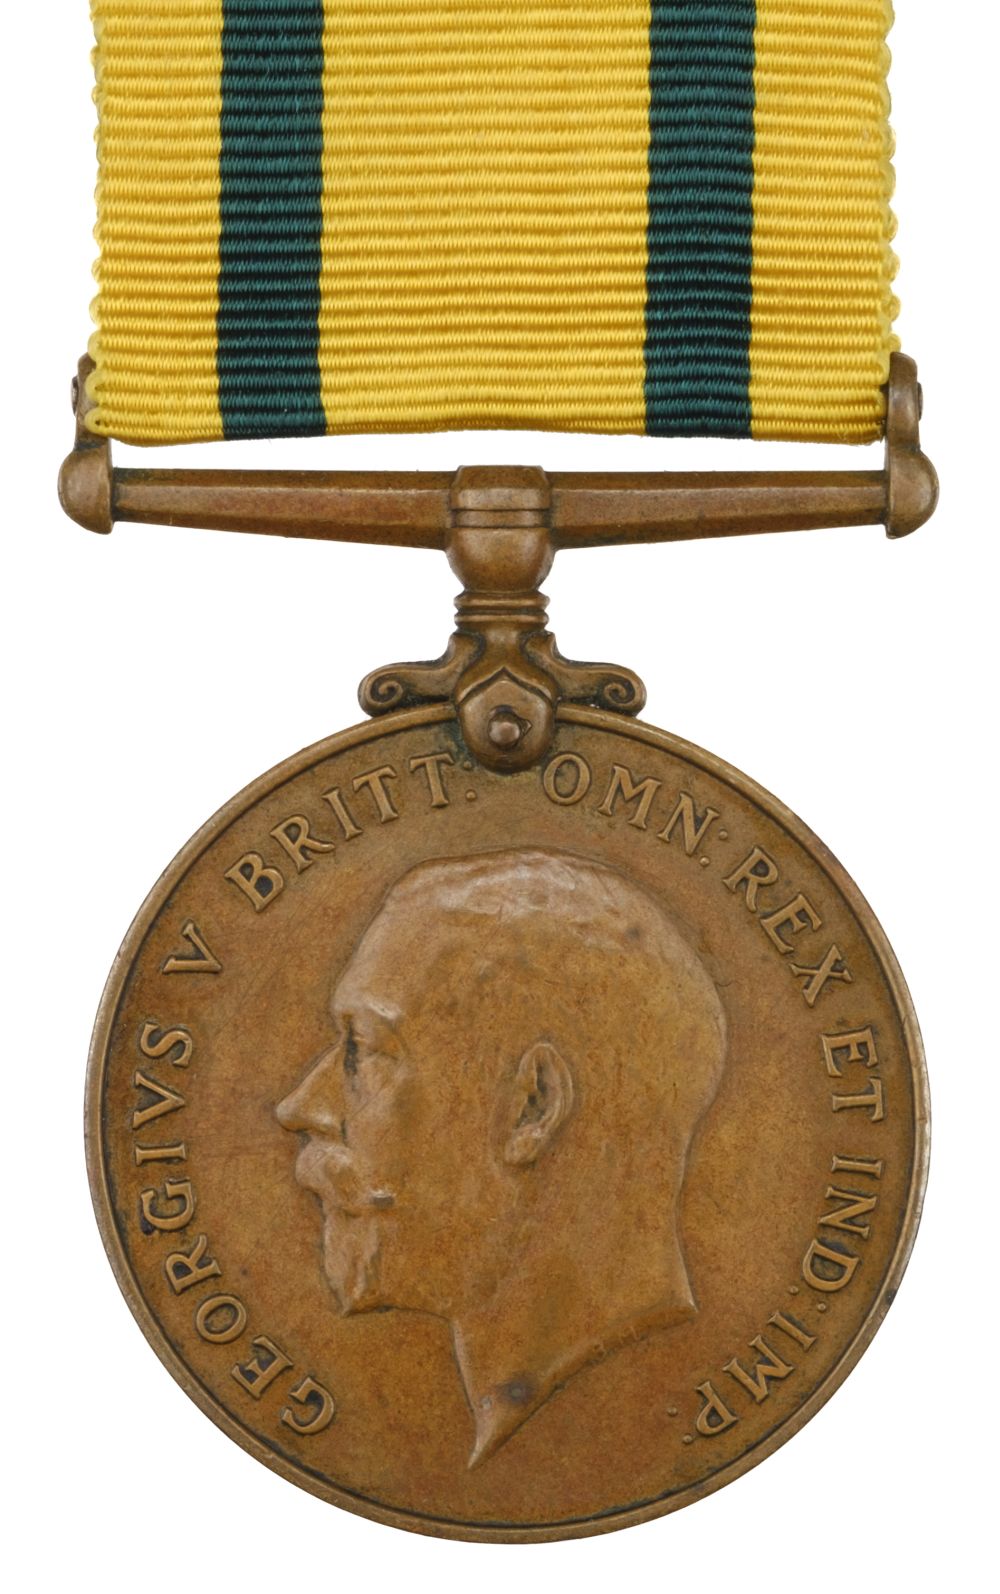 Territorial Force War Medal, G.V.R. (1471 Pte. E. Rottenbury. Devon. R.), good very fine